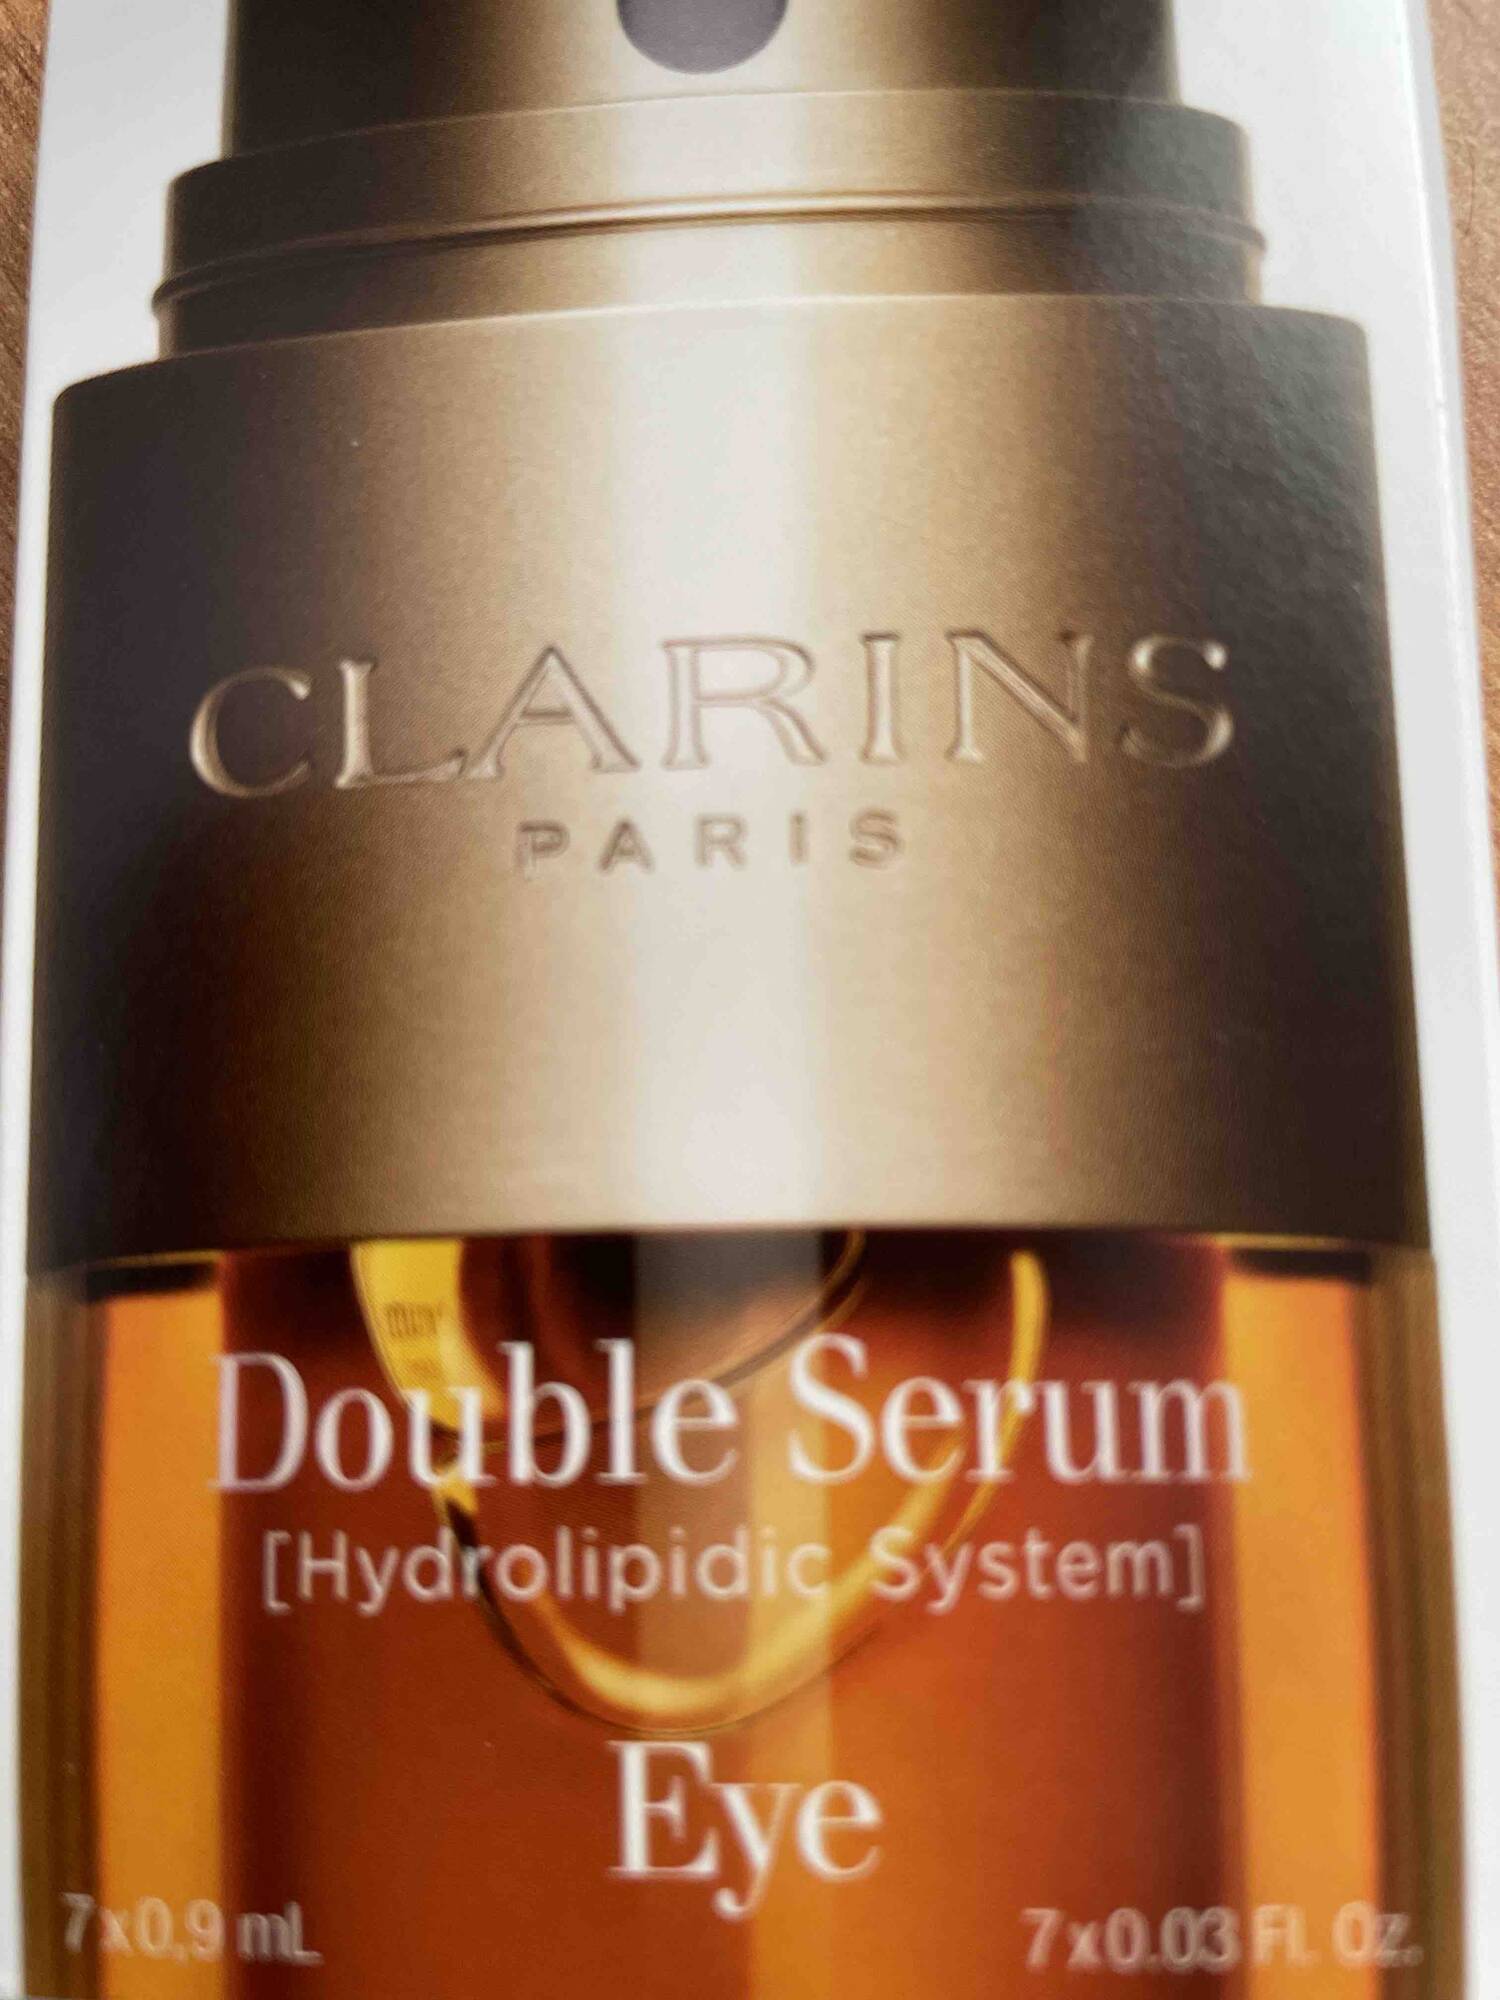 CLARINS - Double sérum [hydrolipidic system] eye